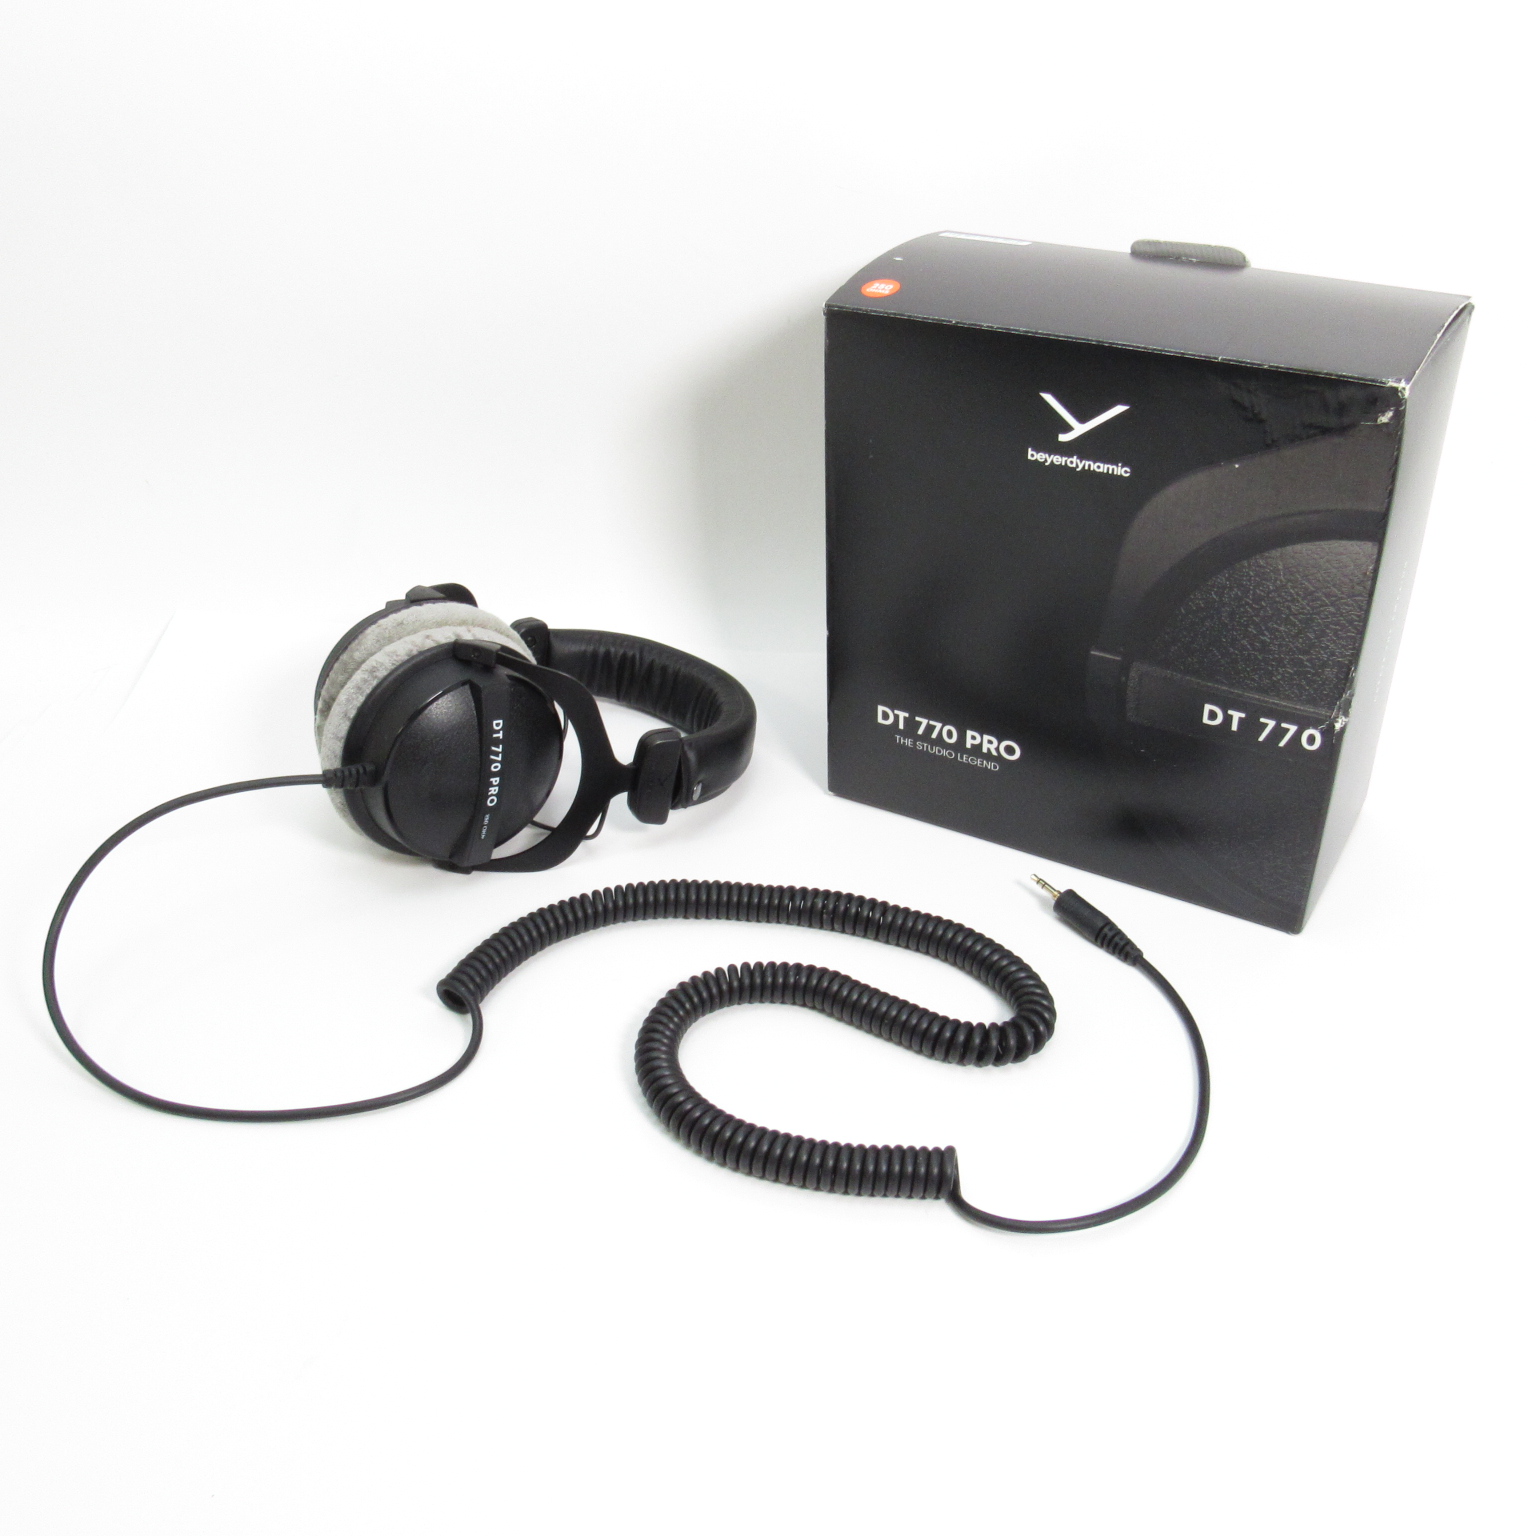 beyerdynamic Noise-Canceling Over-Ear Headphones, Black, DT 770 PRO 250 OHM  